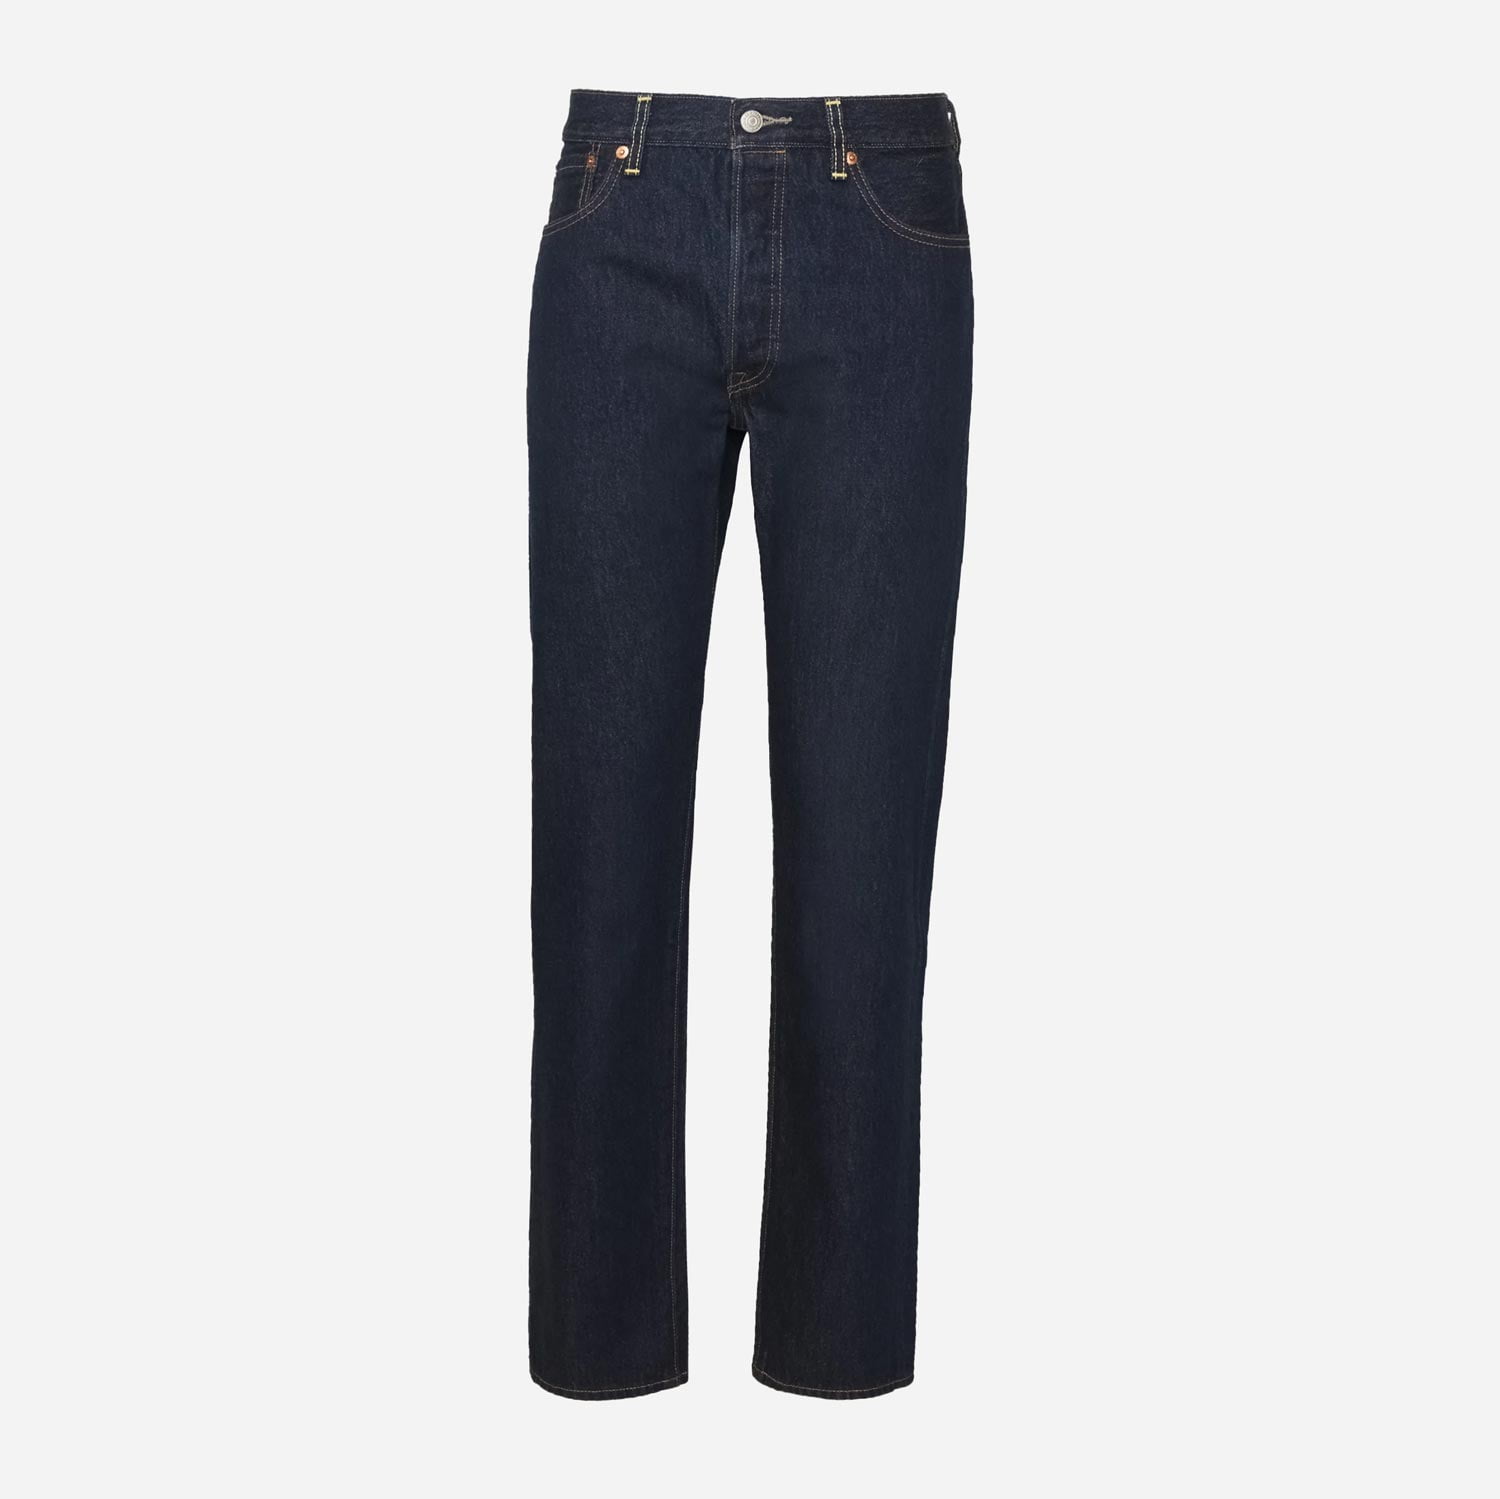 Levis 501 Original Regular Straight Fit Jean - 1954 Rinse